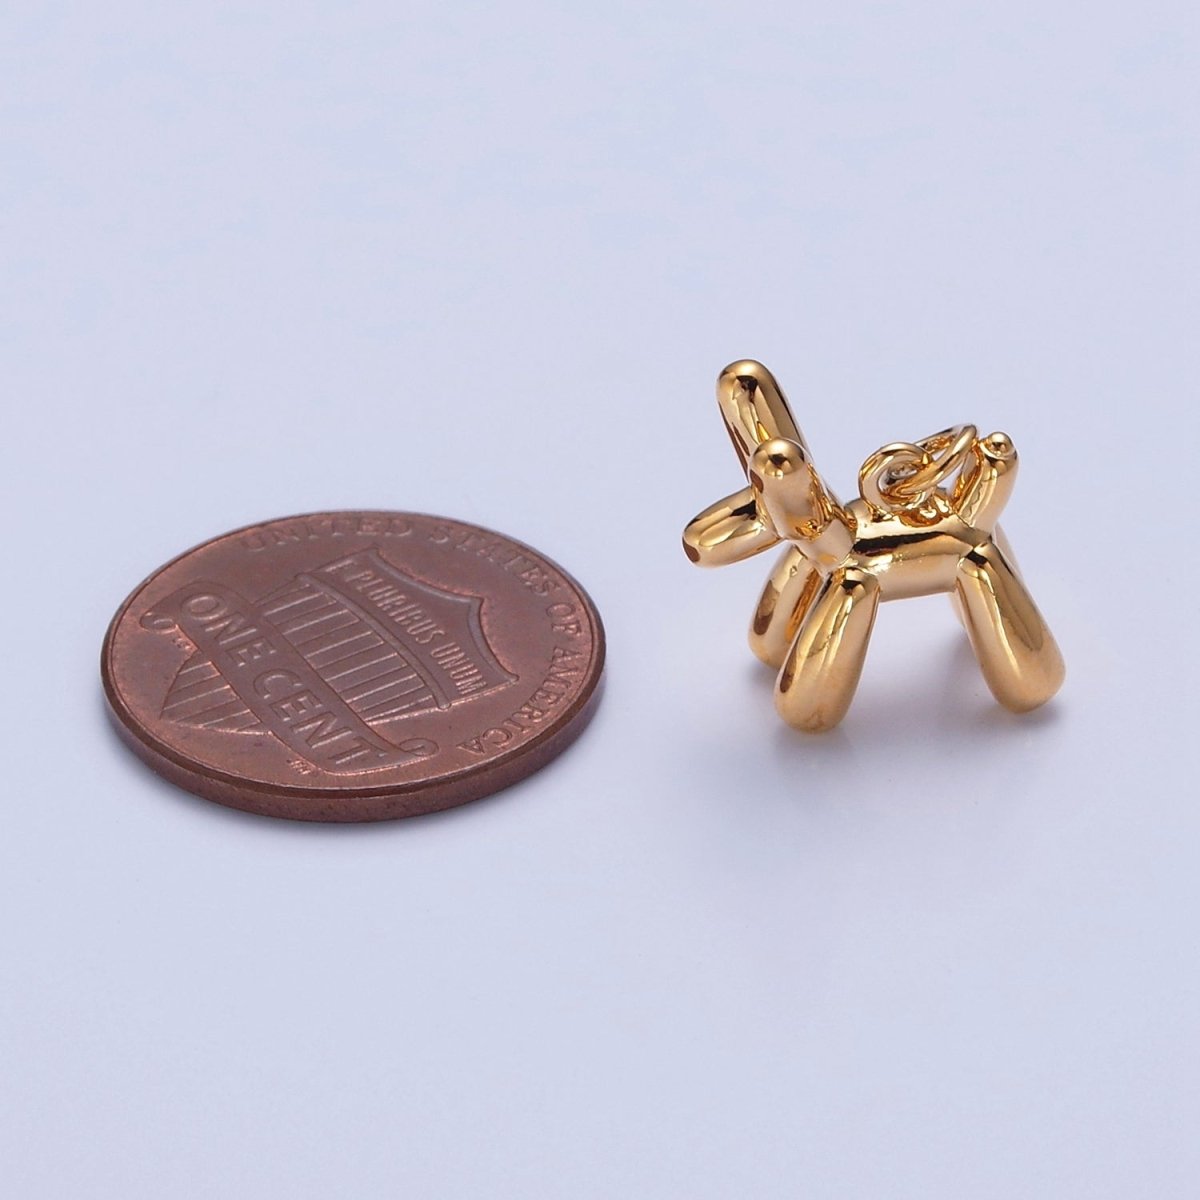 24K Gold Filled Dog Balloon Animal Charm, Dainty Birthday Charm For DIY Jewelry Making | W-148 - DLUXCA